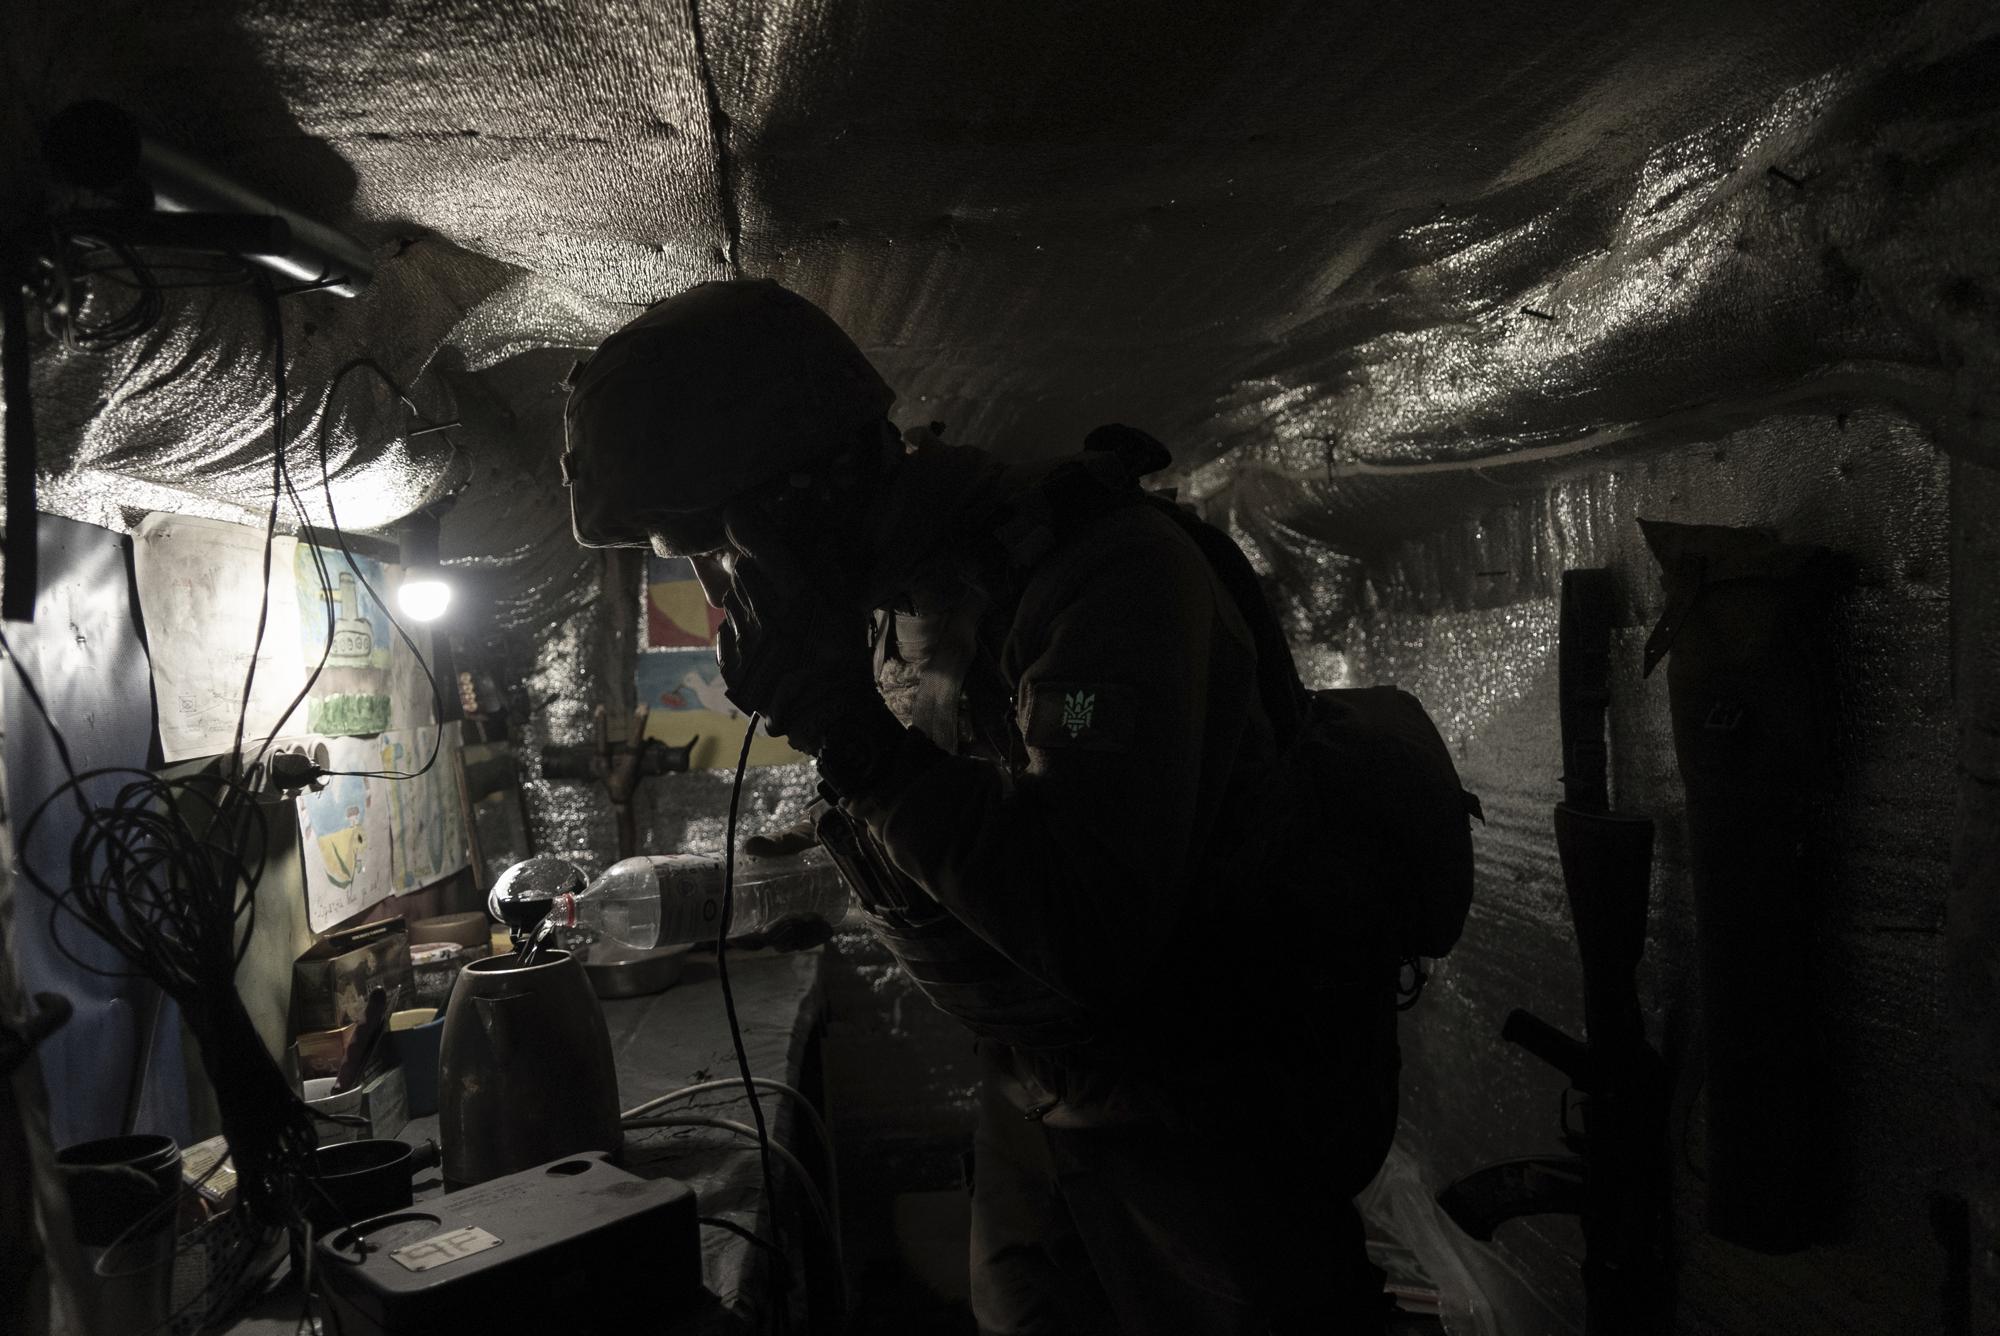 Zakhar Leshchyshyn, a Ukrainian serviceman, reports to a commander via military intercom while in a shelter at the frontline positions near Zolote, Ukraine, Saturday, Feb. 19, 2022. (AP Photo/Mstyslav Chernov)